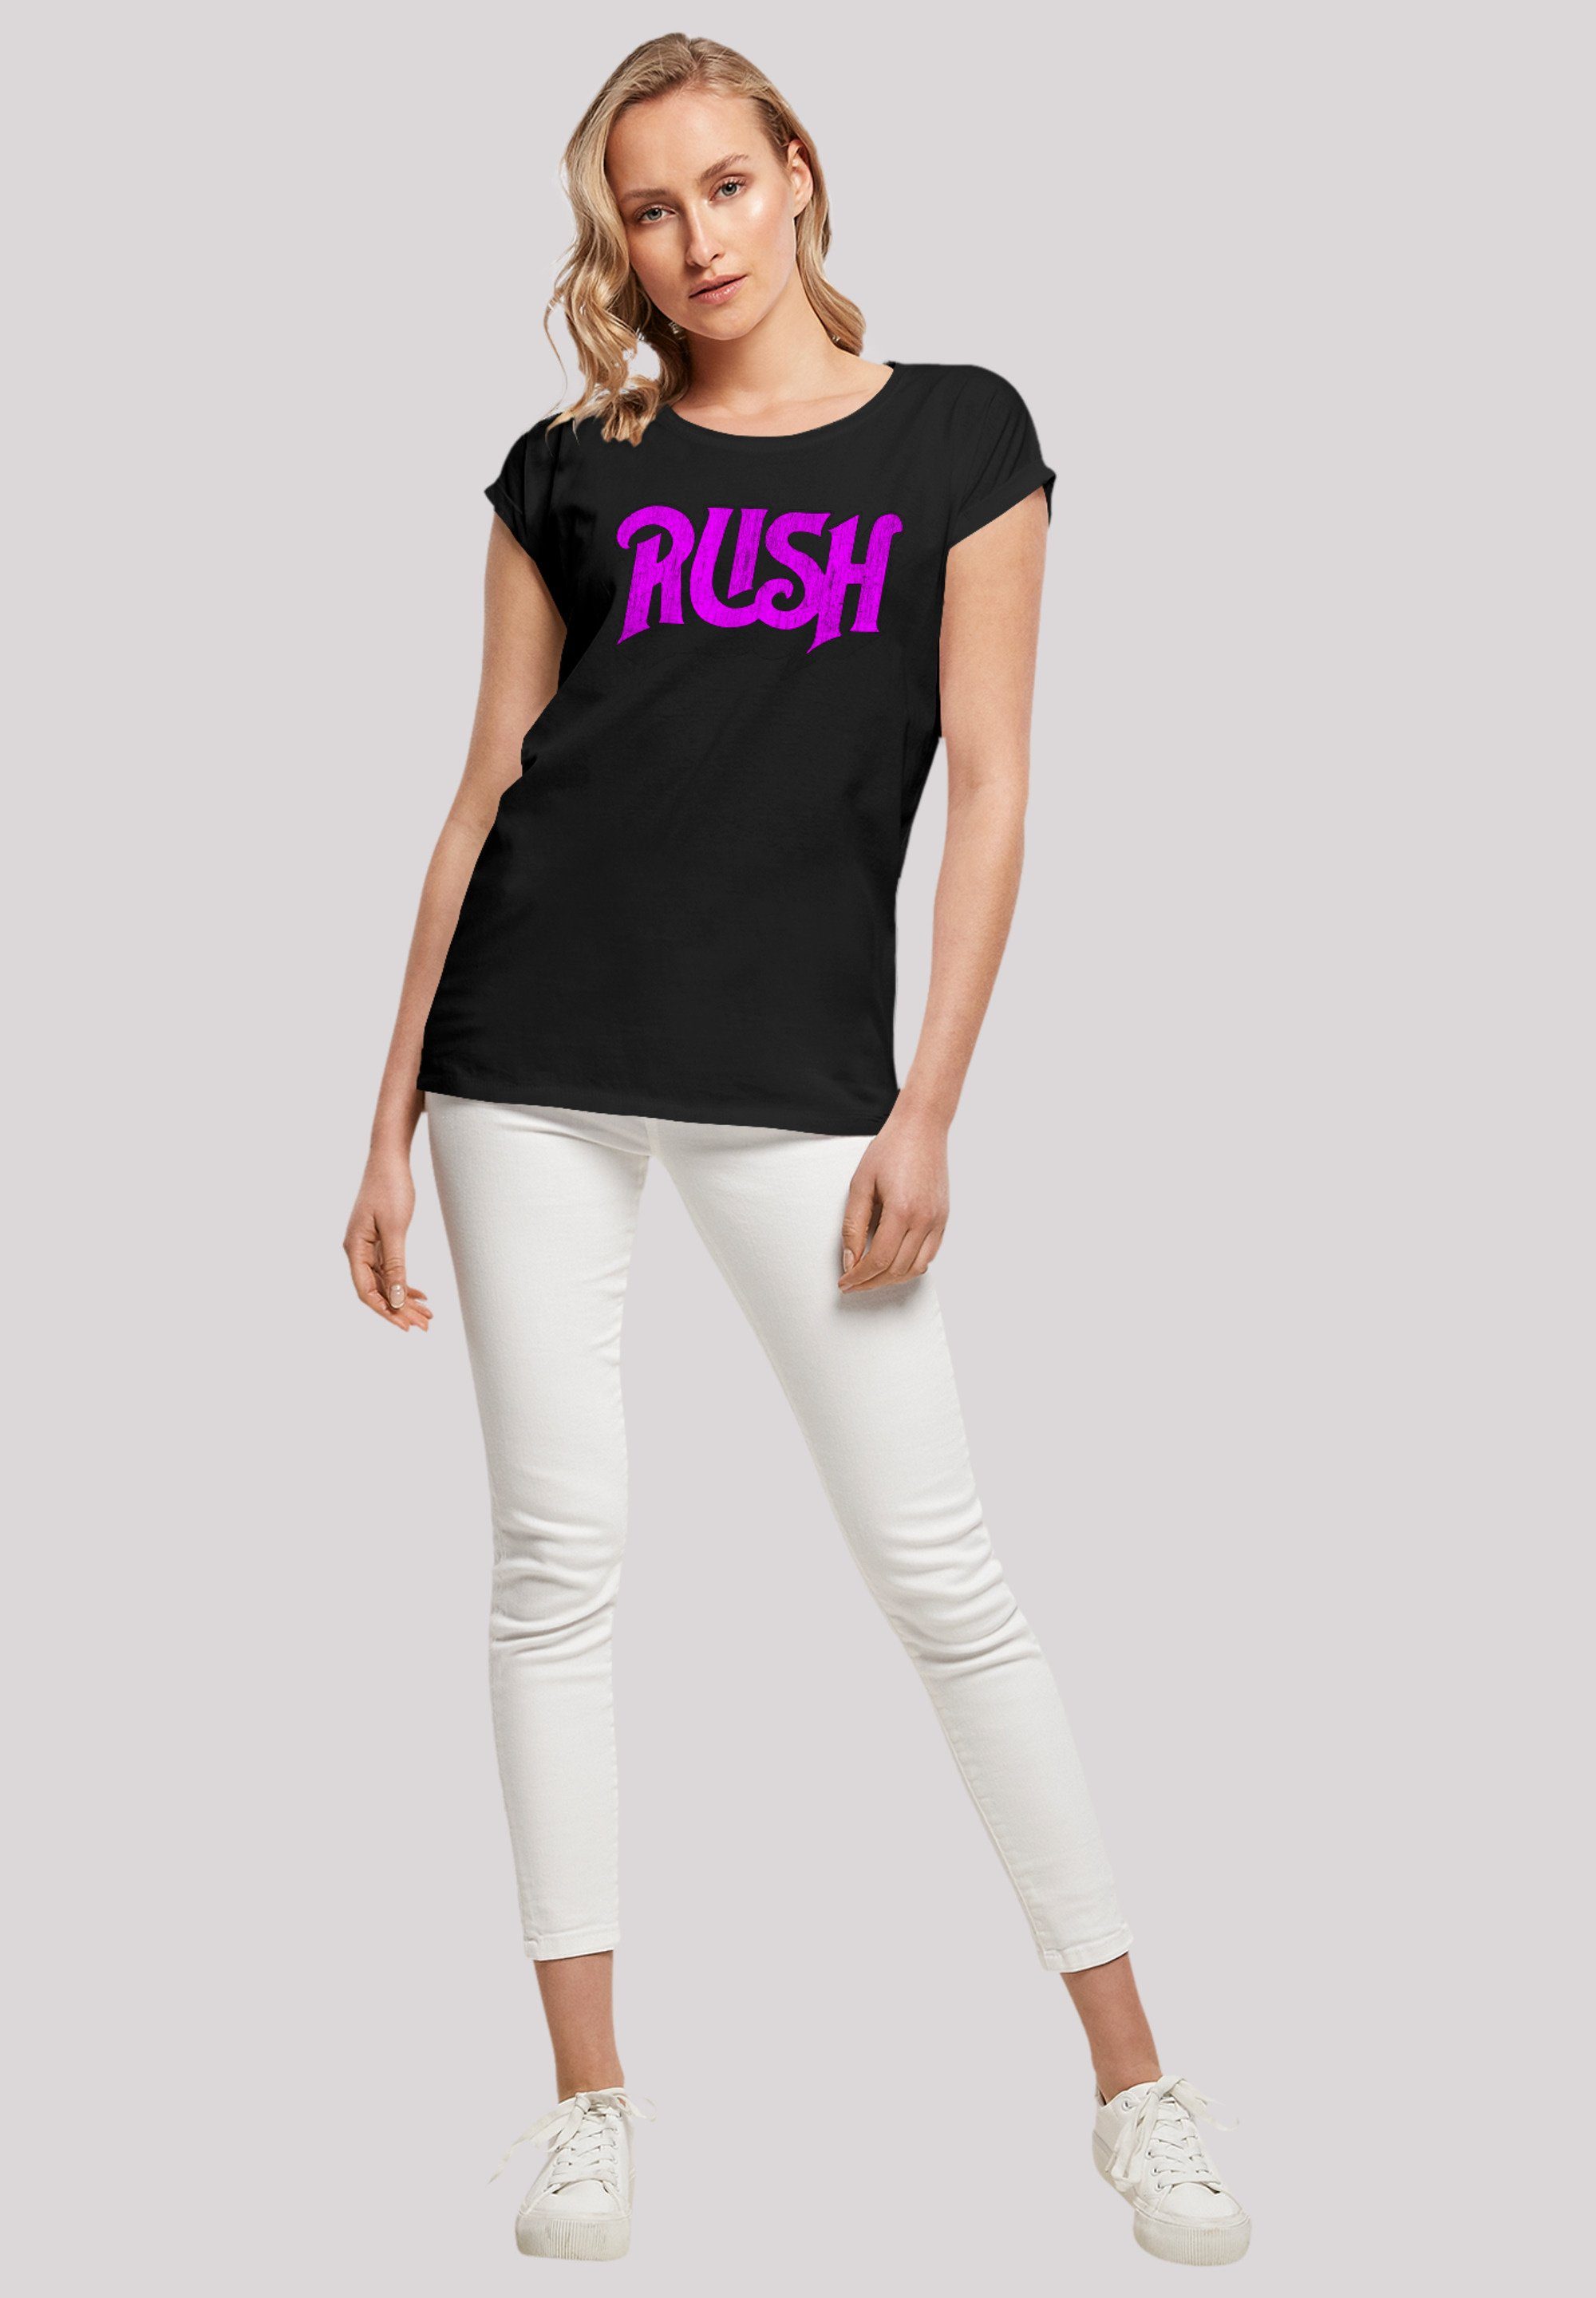 Distressed schwarz Premium Band Qualität T-Shirt Rock F4NT4STIC Rush Logo